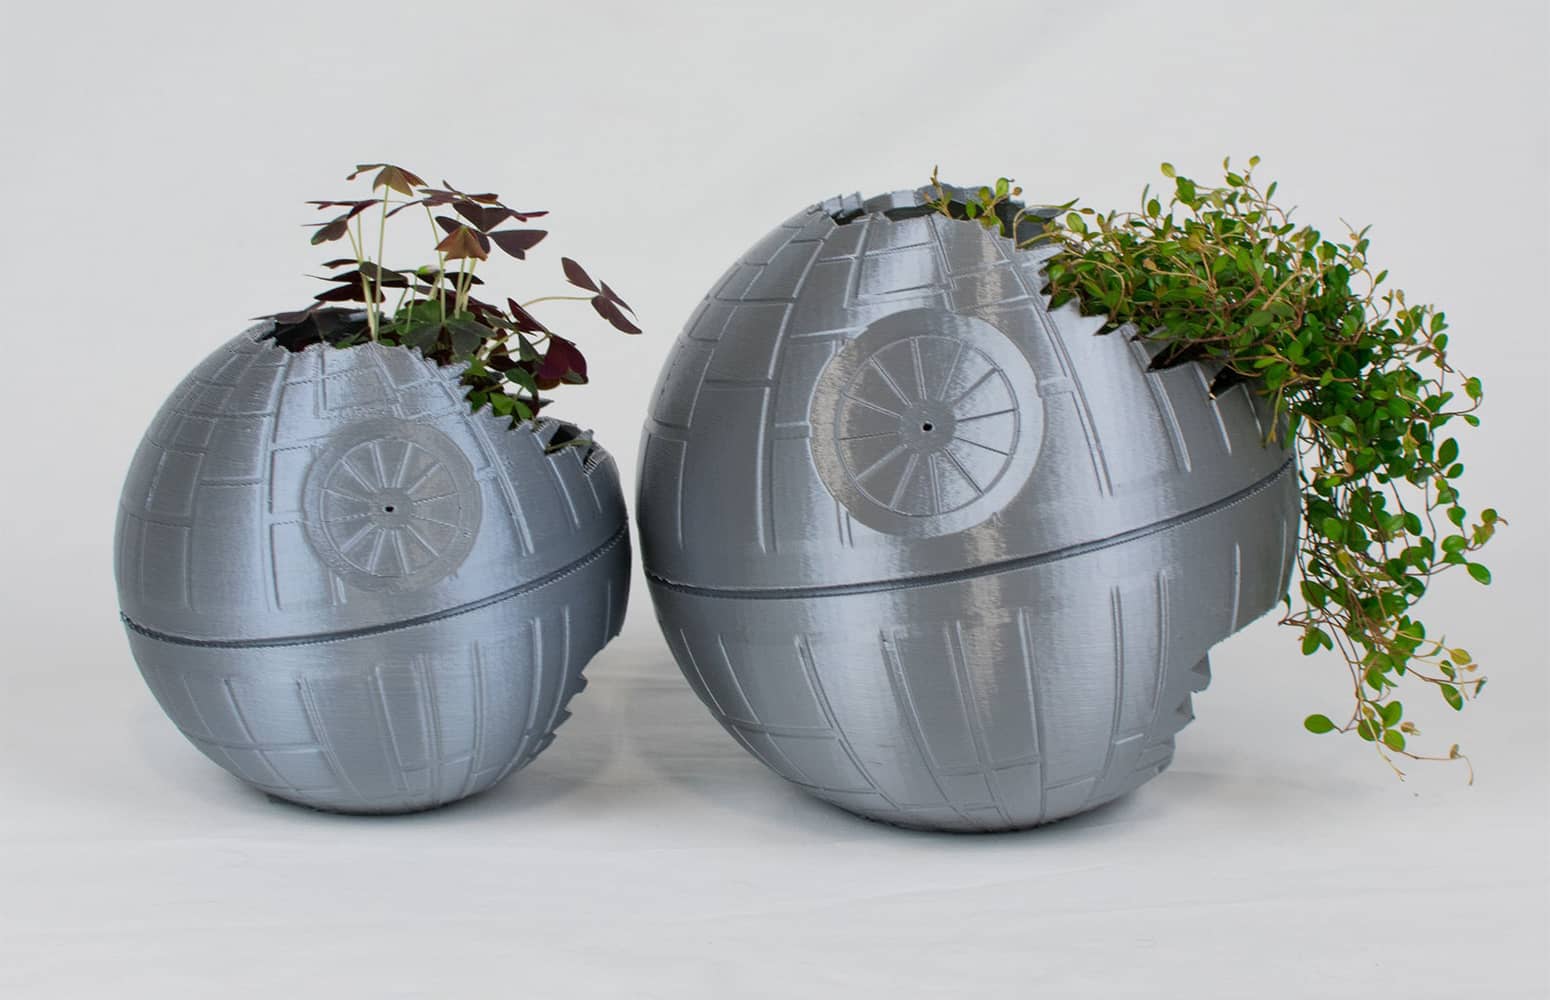 Star Wars Death Star II Planters